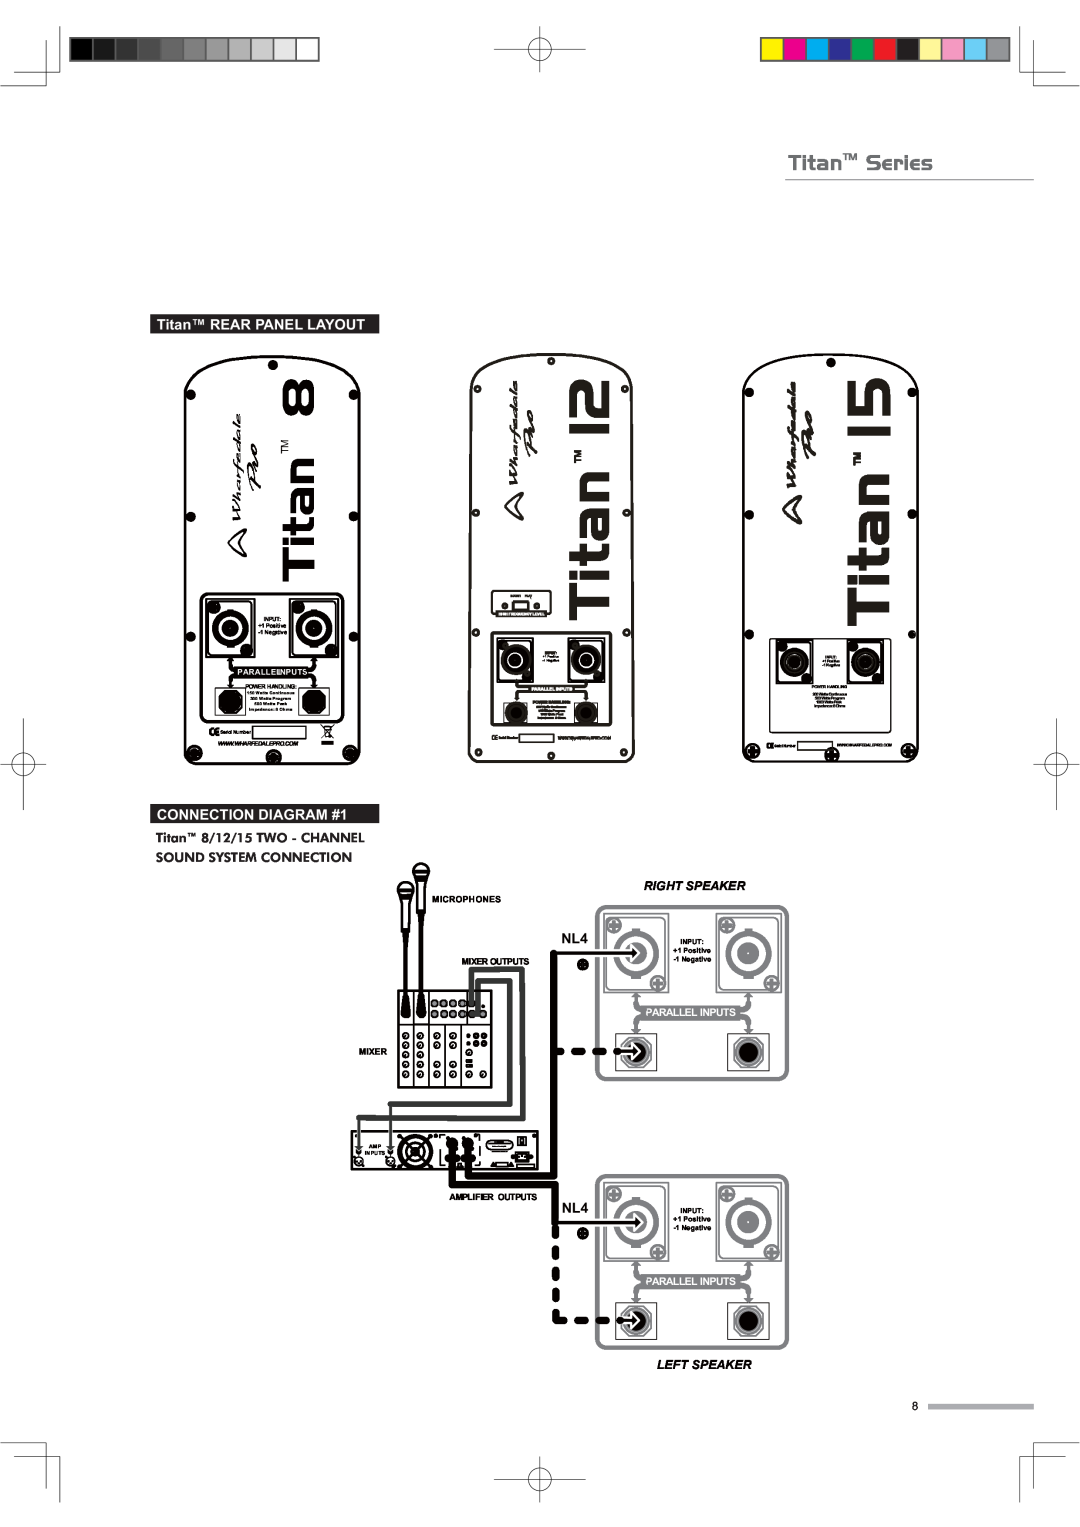 Wharfedale SUB A12, 15 PASSIVE TitanTM Series, Titan REAR PANEL LAYOUT, CONNECTION DIAGRAM #1, Right Speaker, Left Speaker 